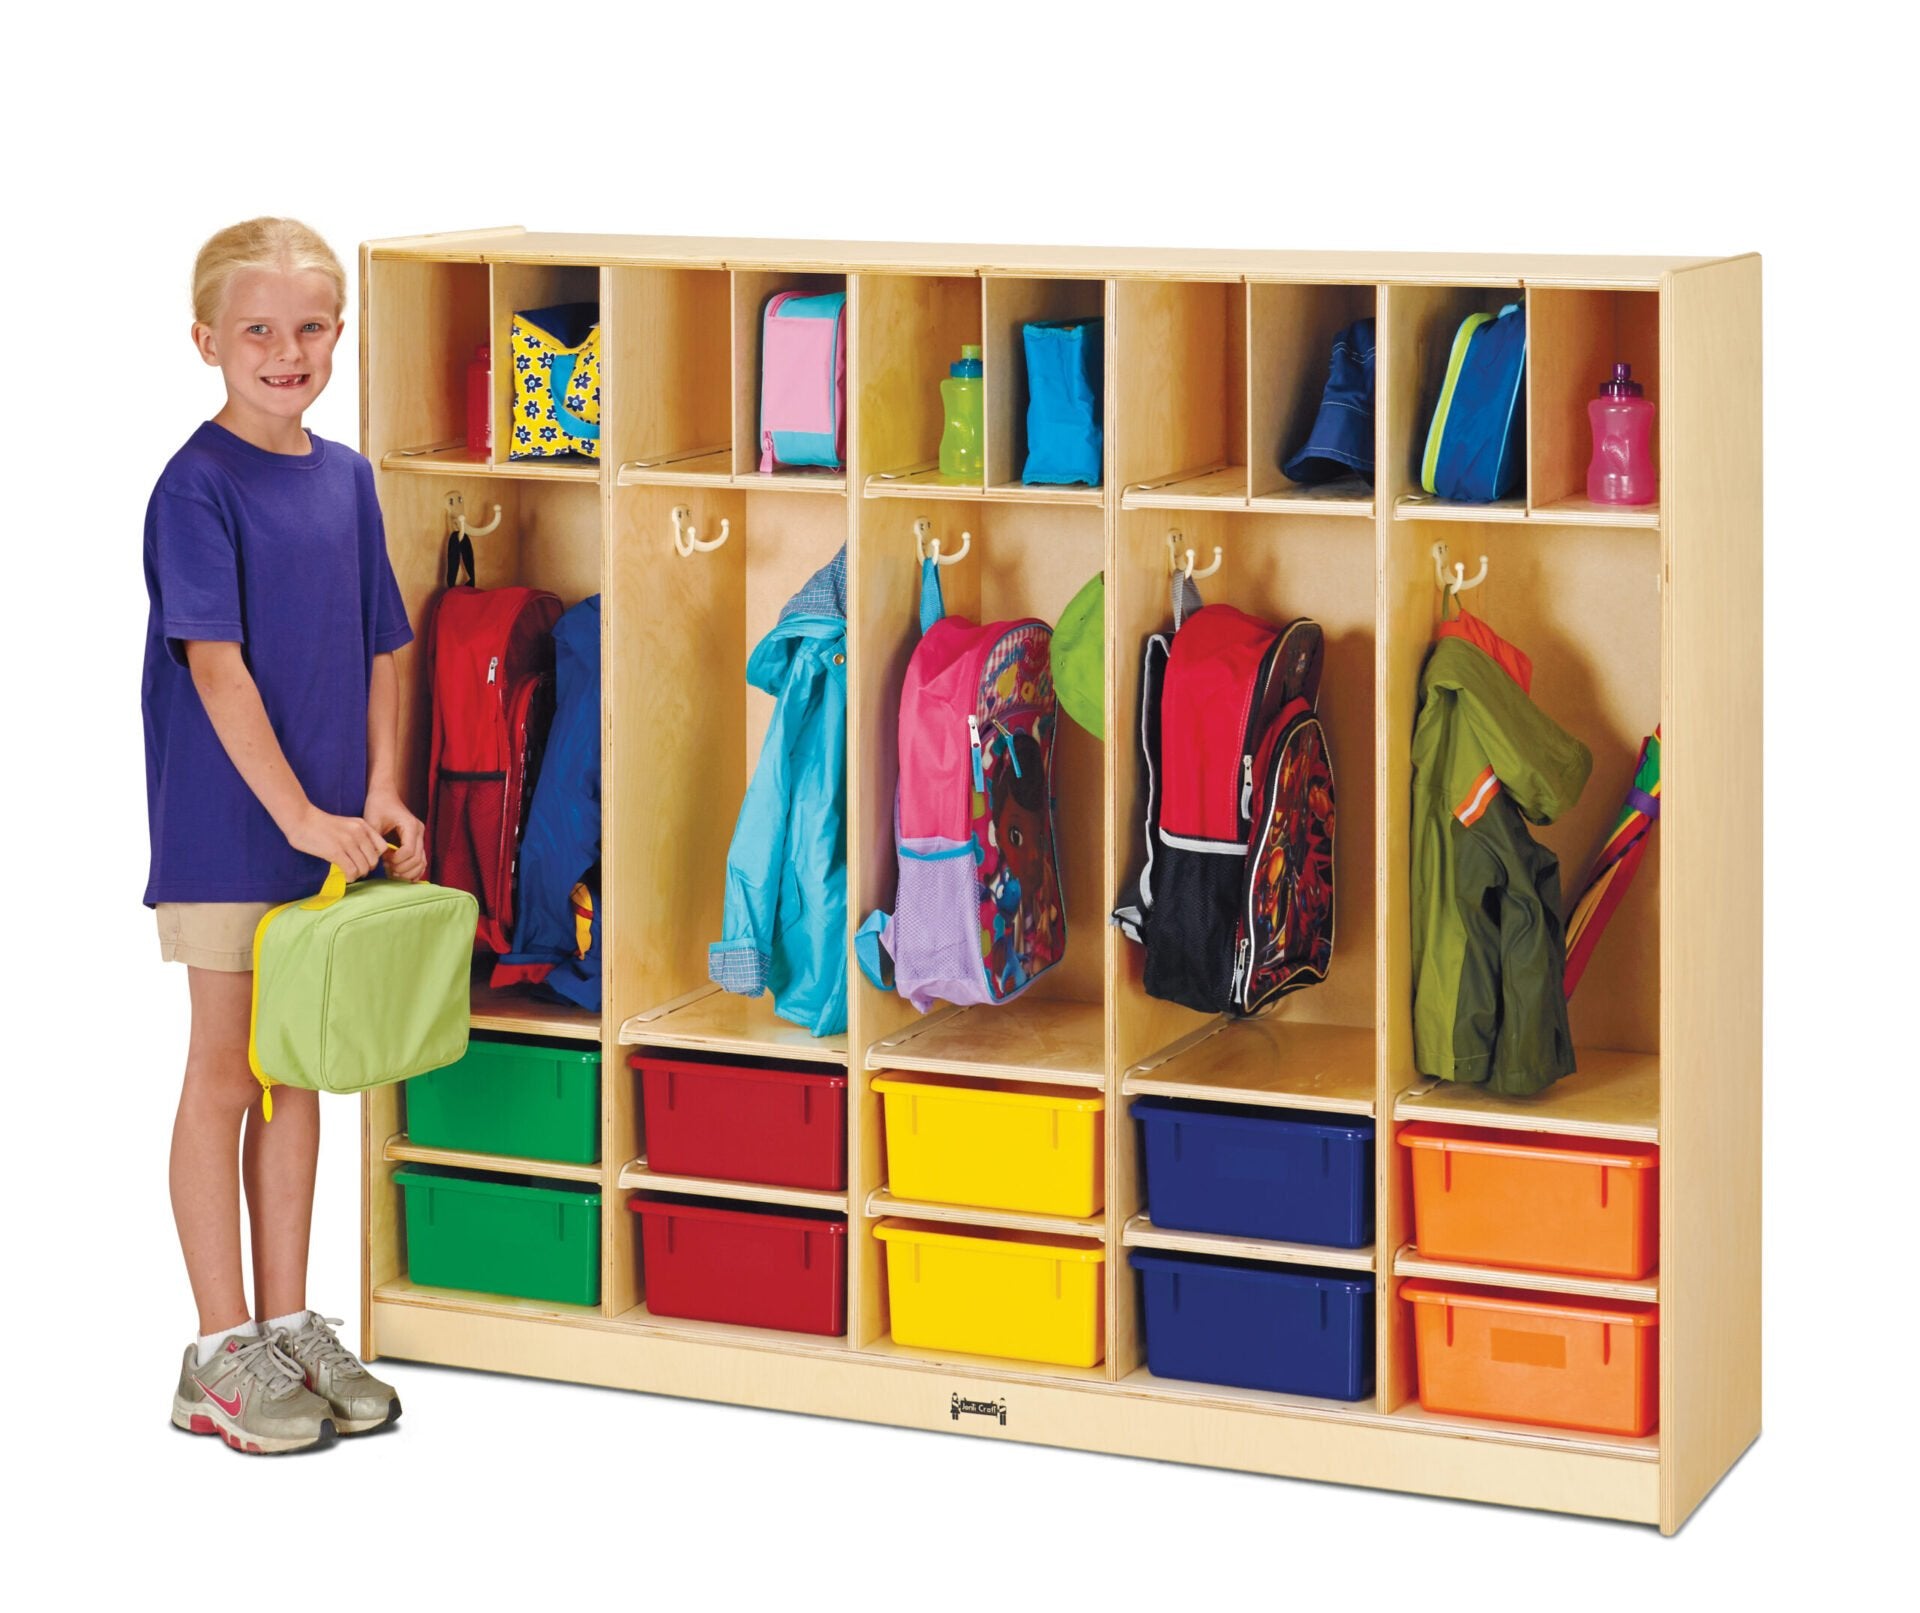 Jonti-Craft Large Locker Organizer with 10 Colored Tubs